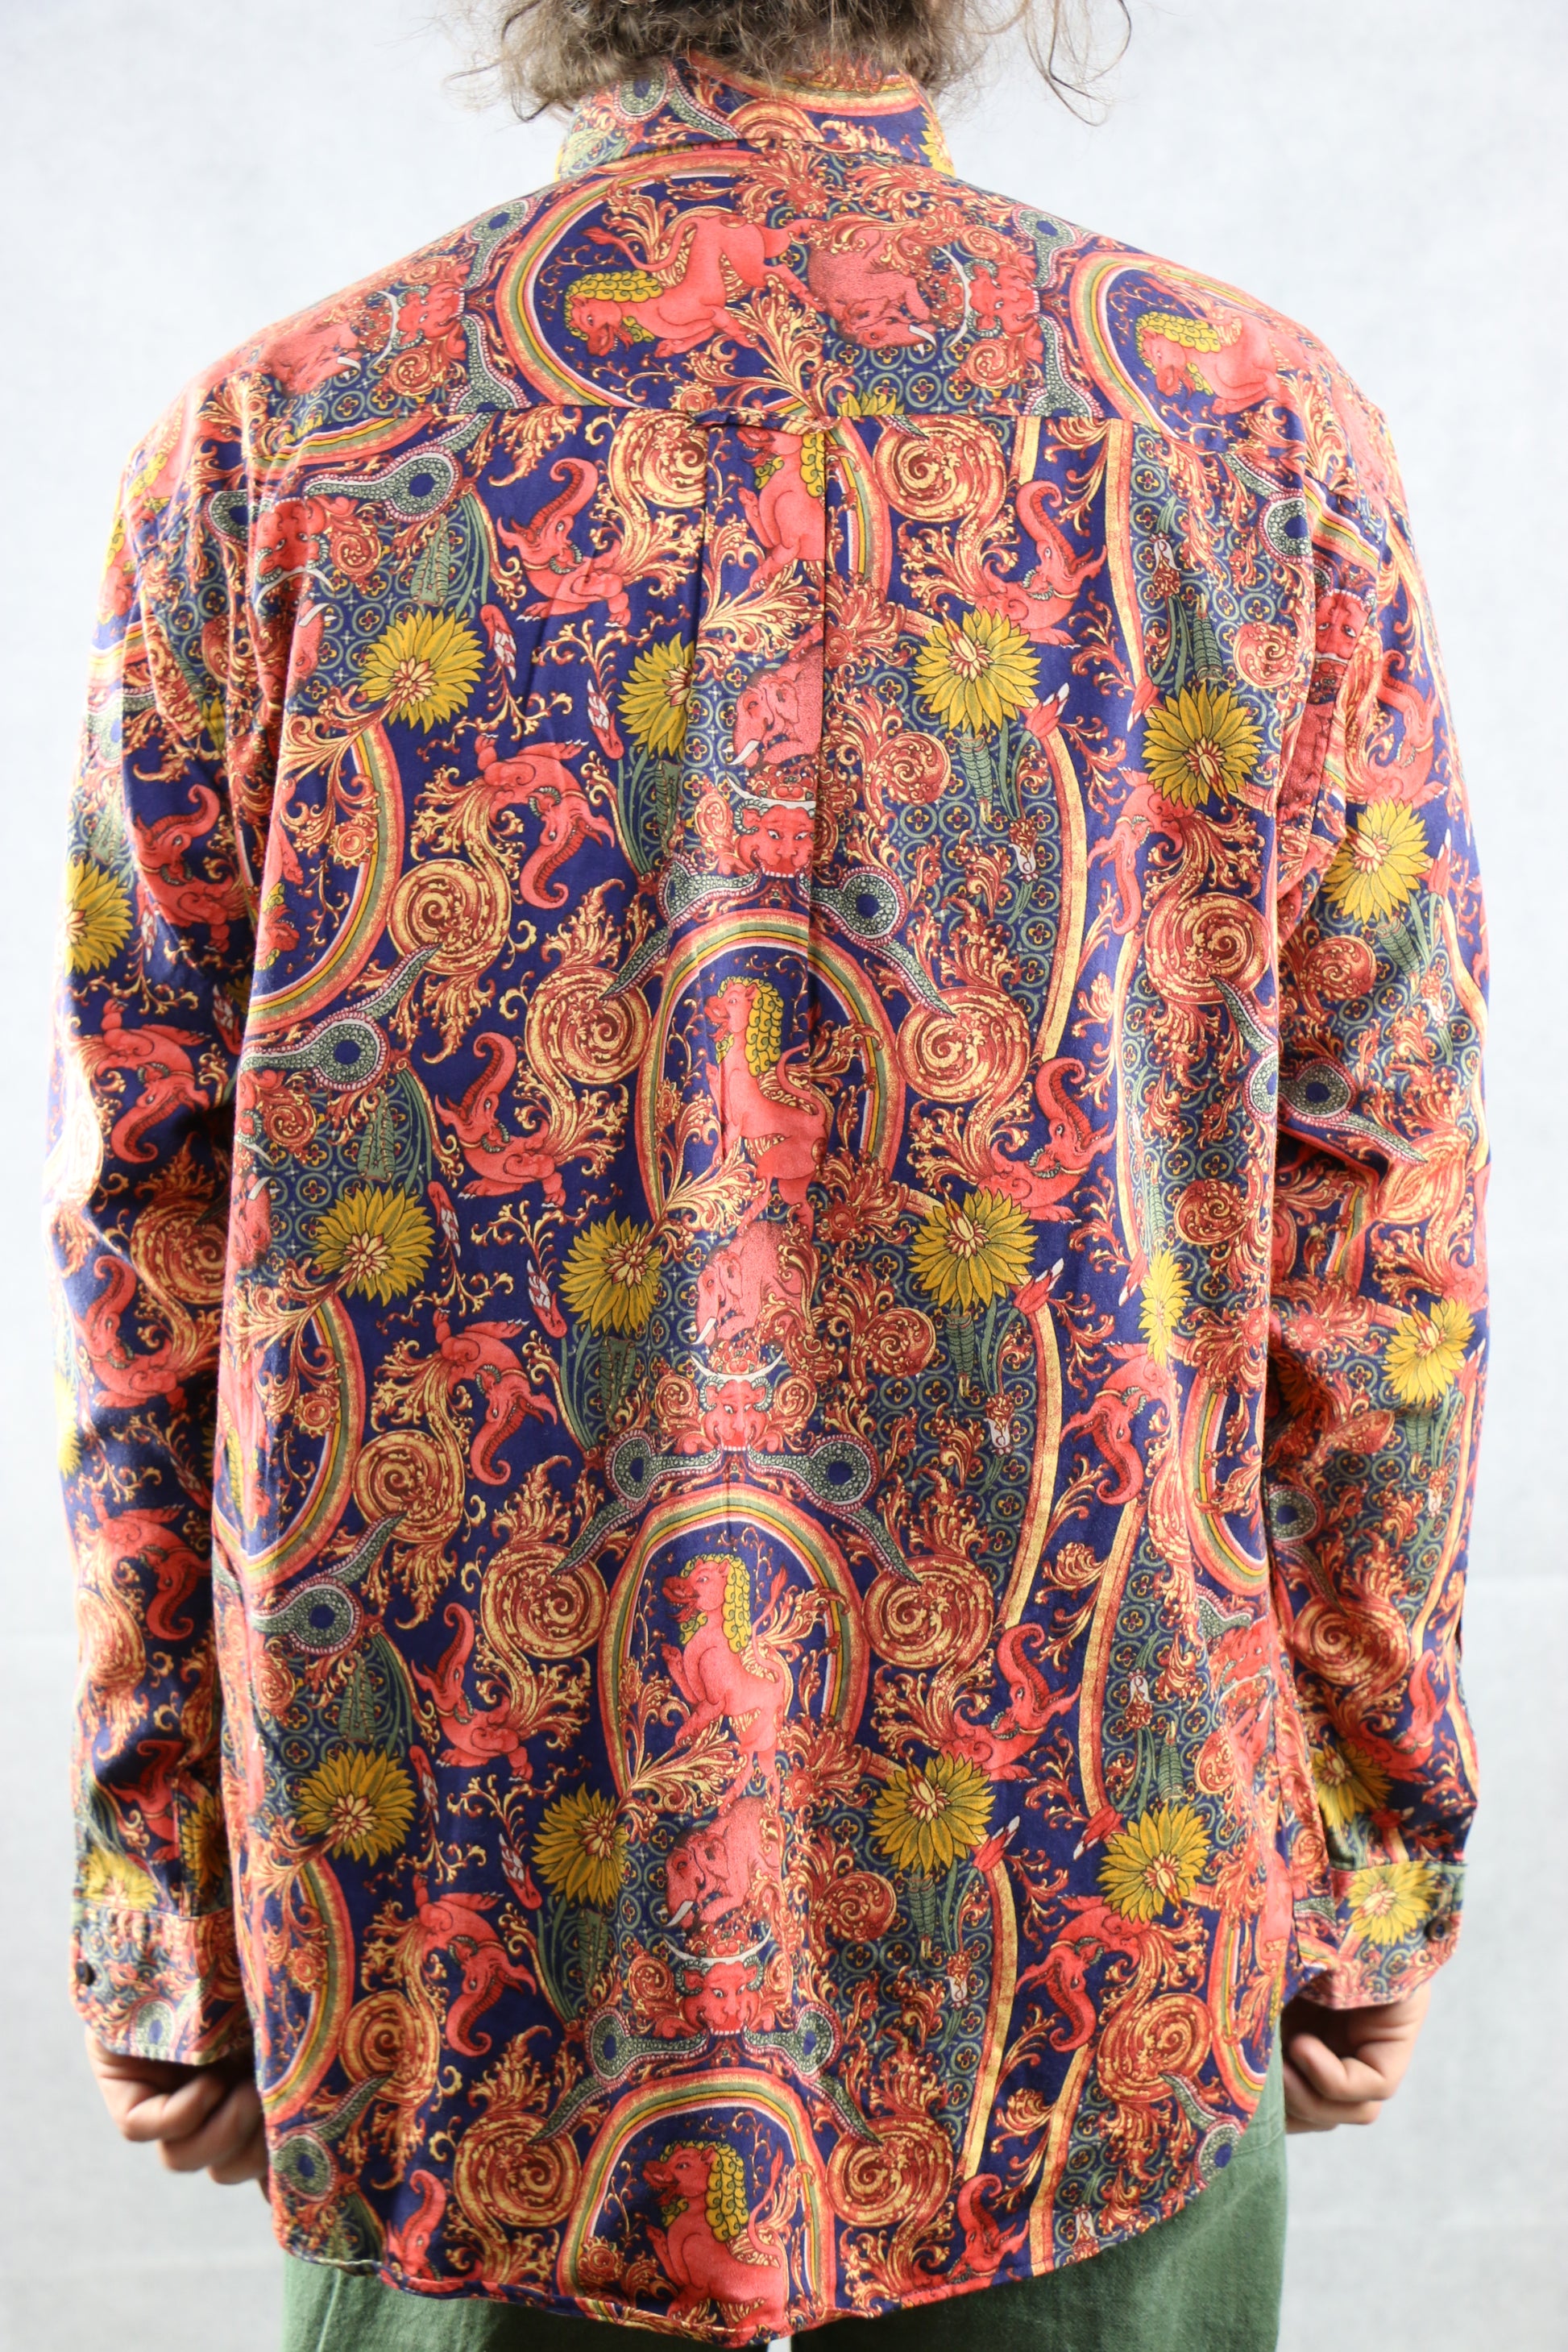 Hugo Boss Abstract Shirt - vintage clothing clochard92.com